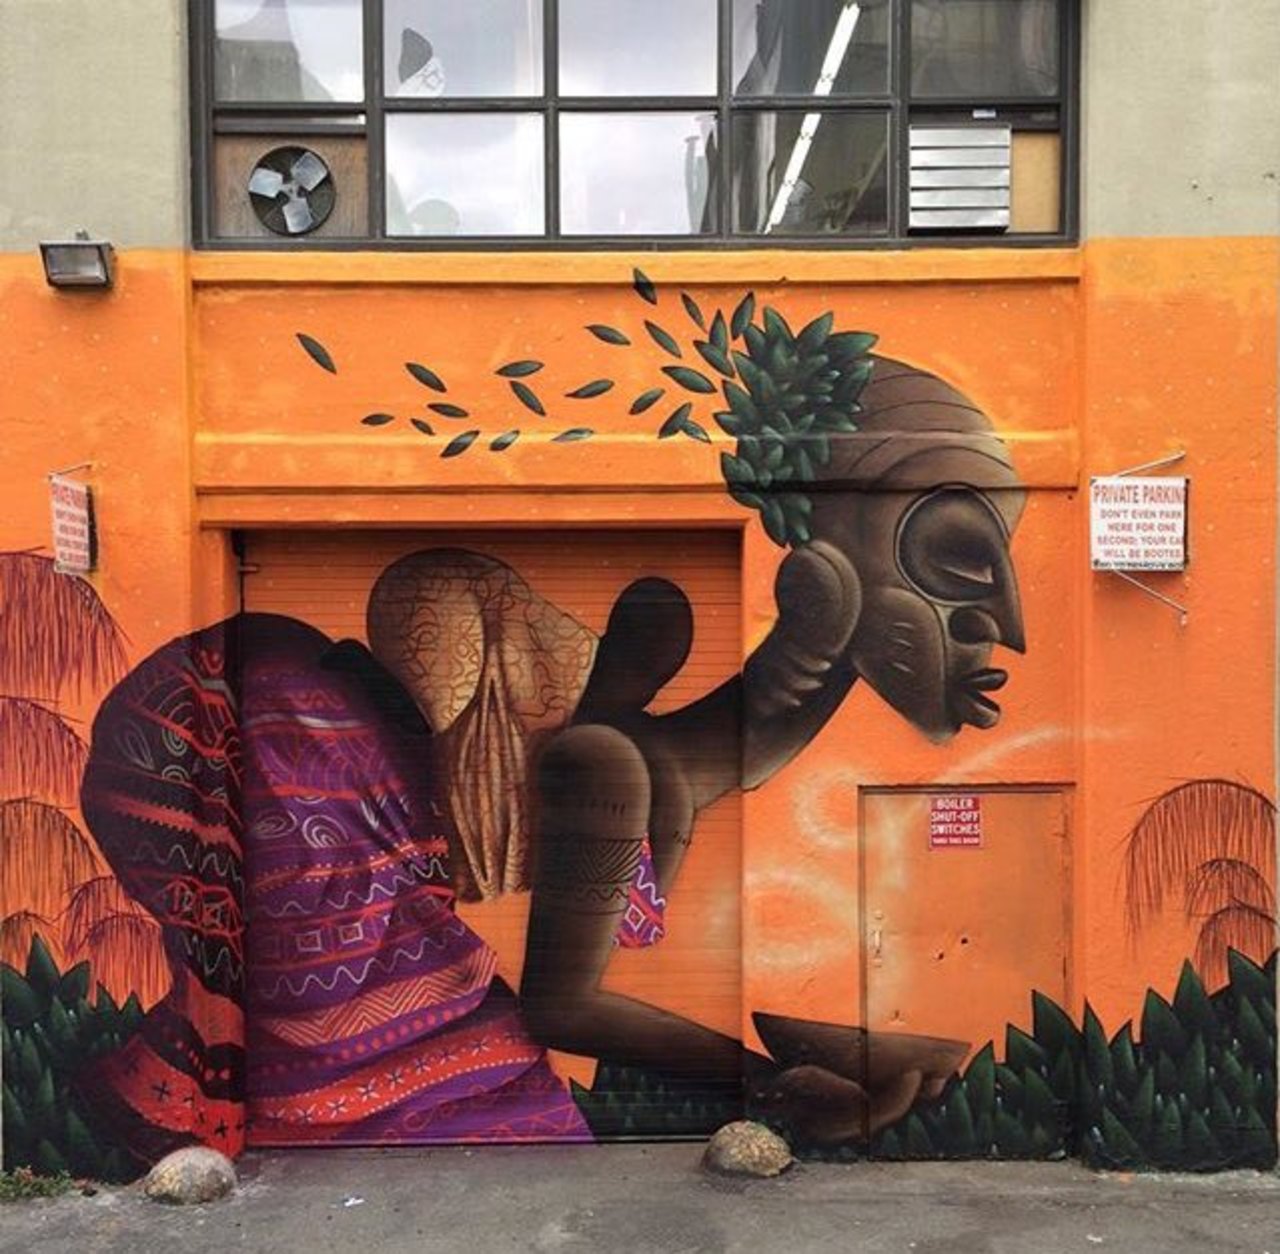 New Street Art by Alexandre Keto in NYC 

#art #graffiti #mural #streetart https://t.co/1YjvtzrksV